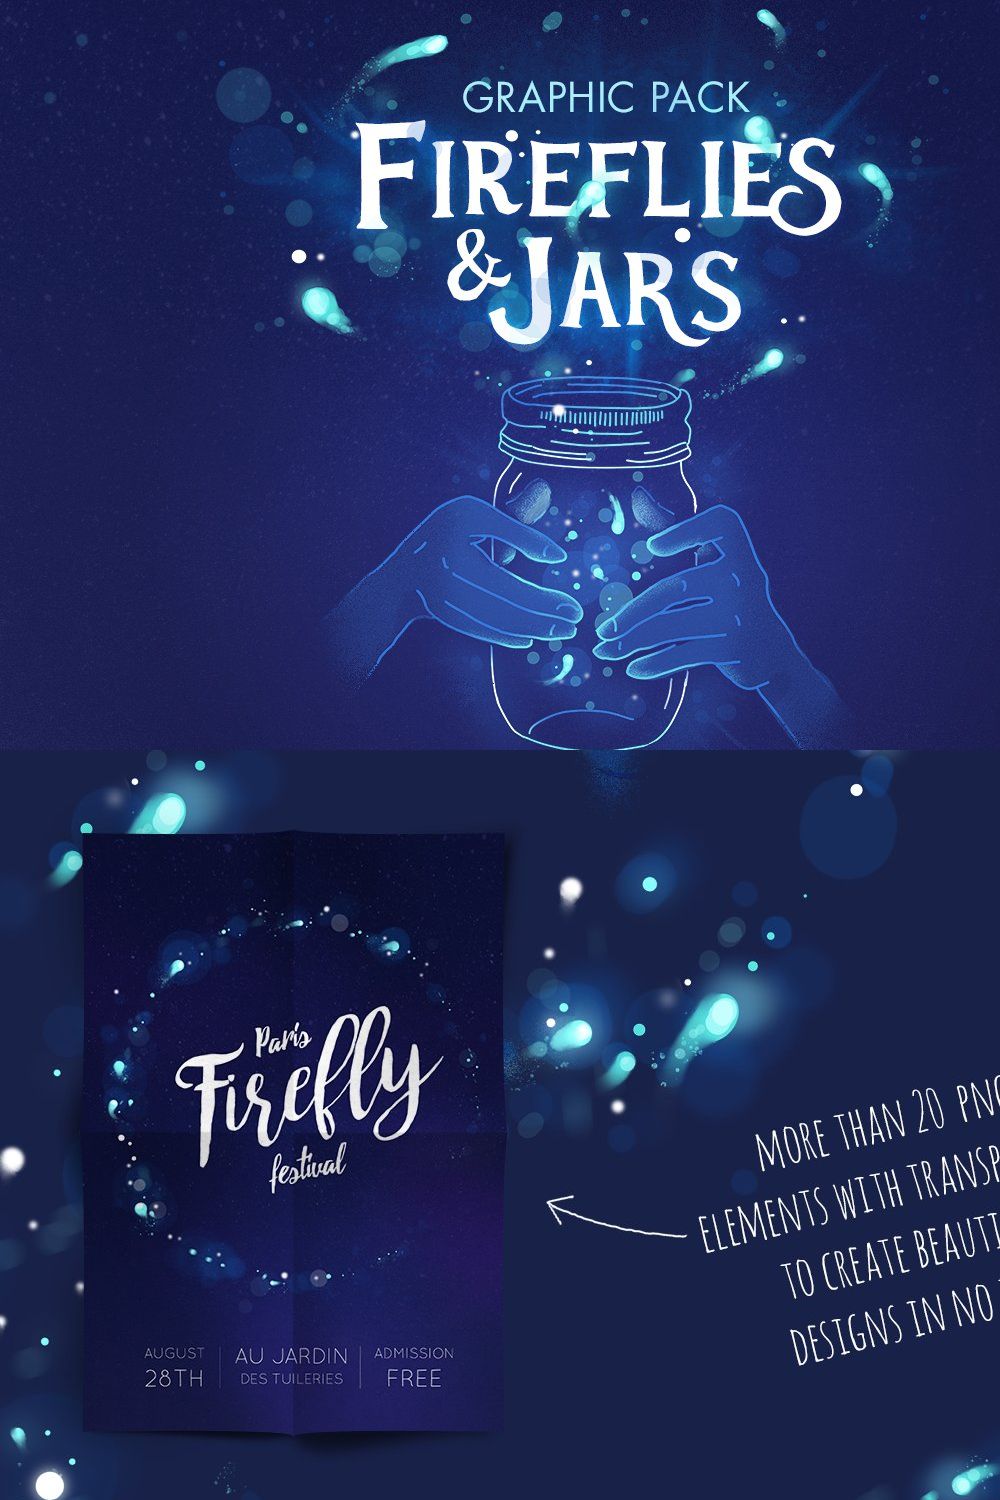 Fireflies & Jars pinterest preview image.